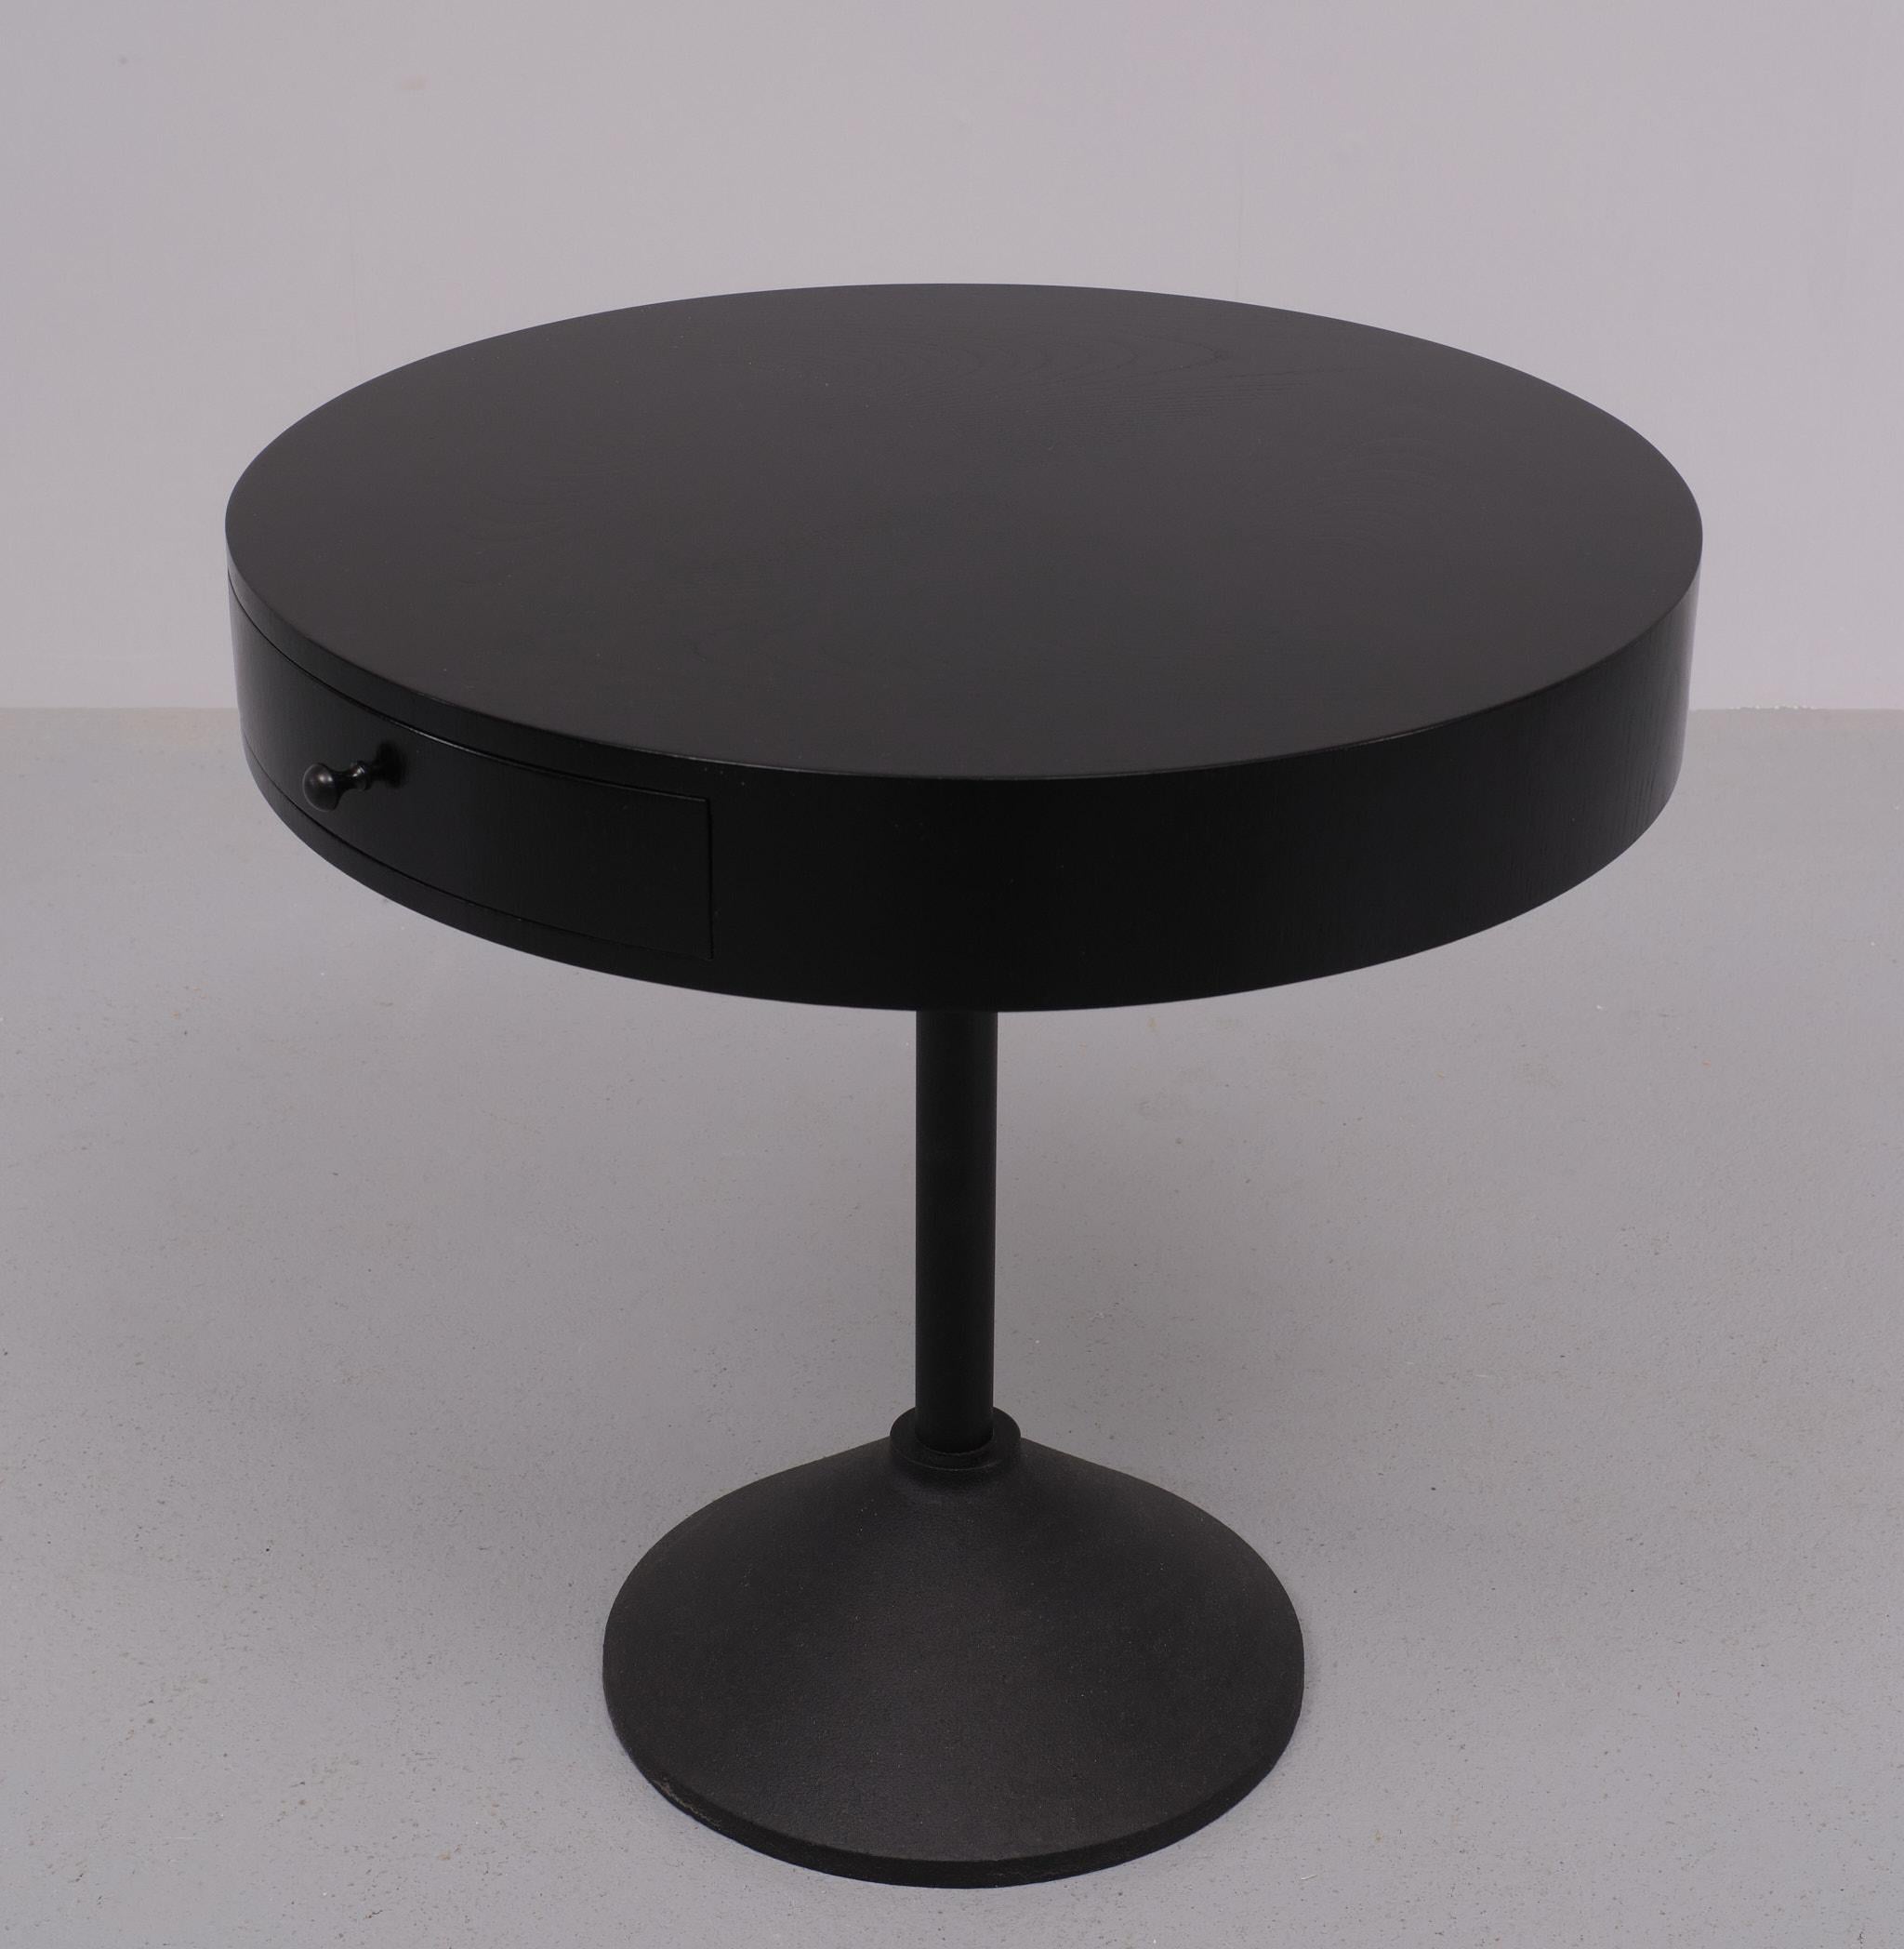 Ebonized Porada Arredi Black Round side Table  1980s Italy  For Sale